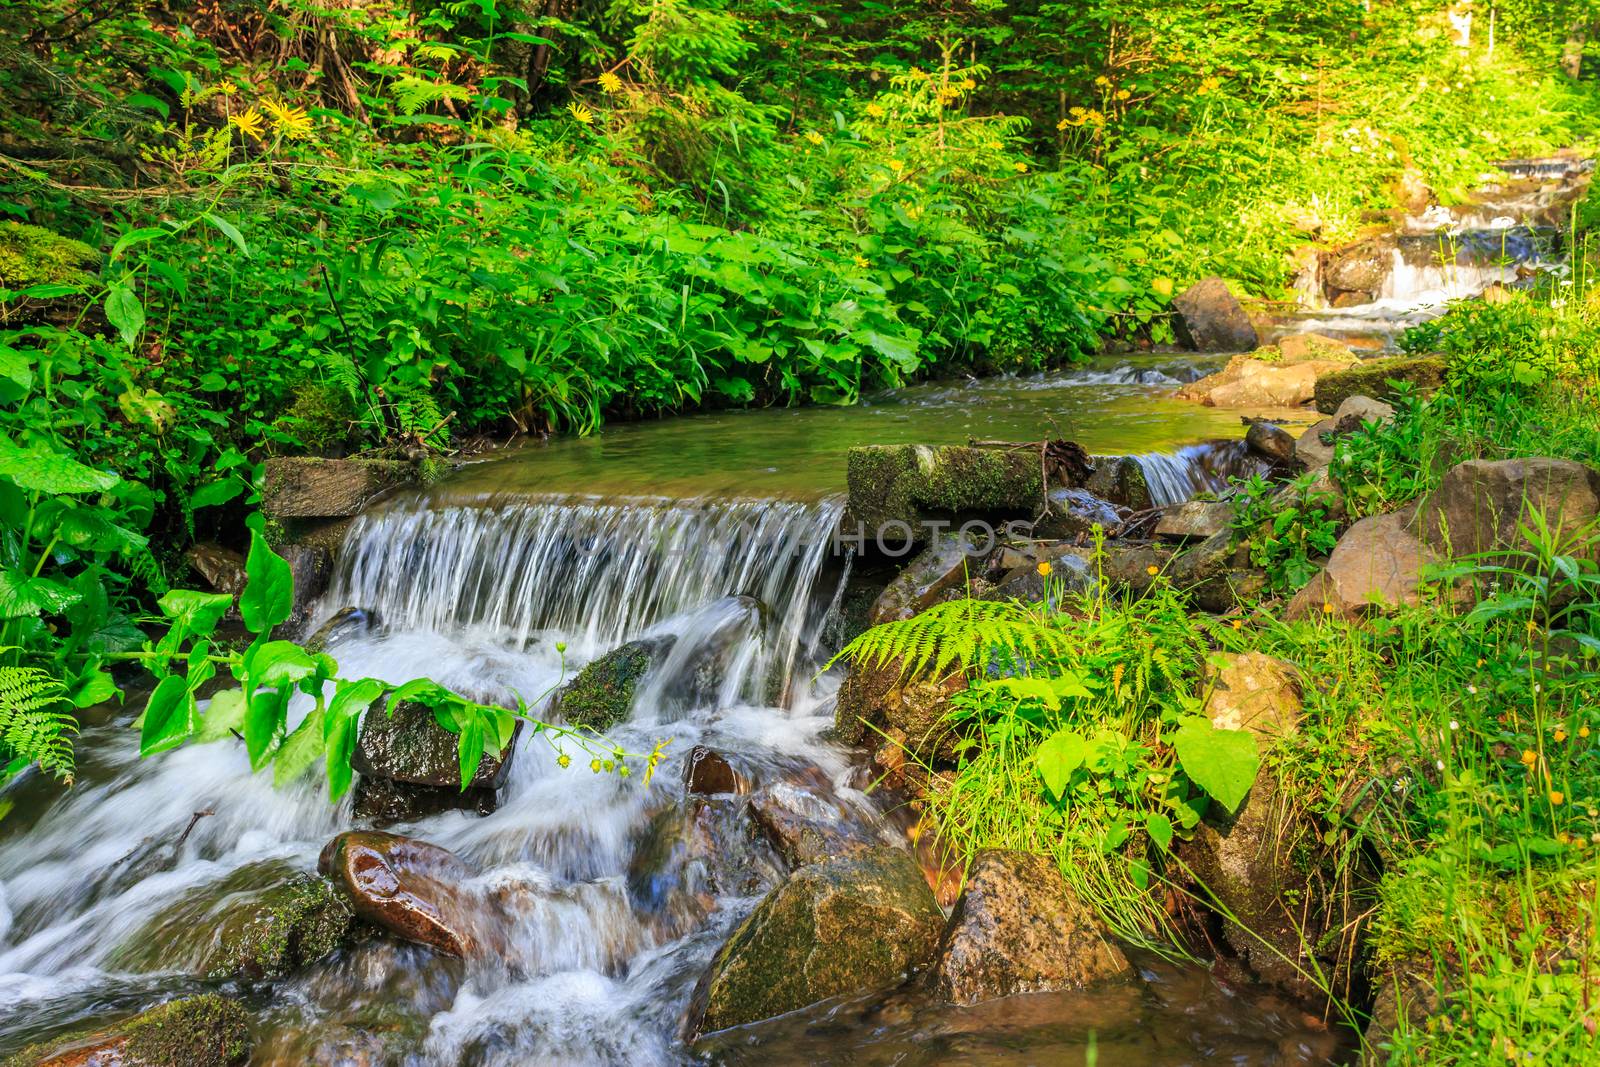 narrow forest stream runs along the ferns, water splashes on the rocks near the cascade